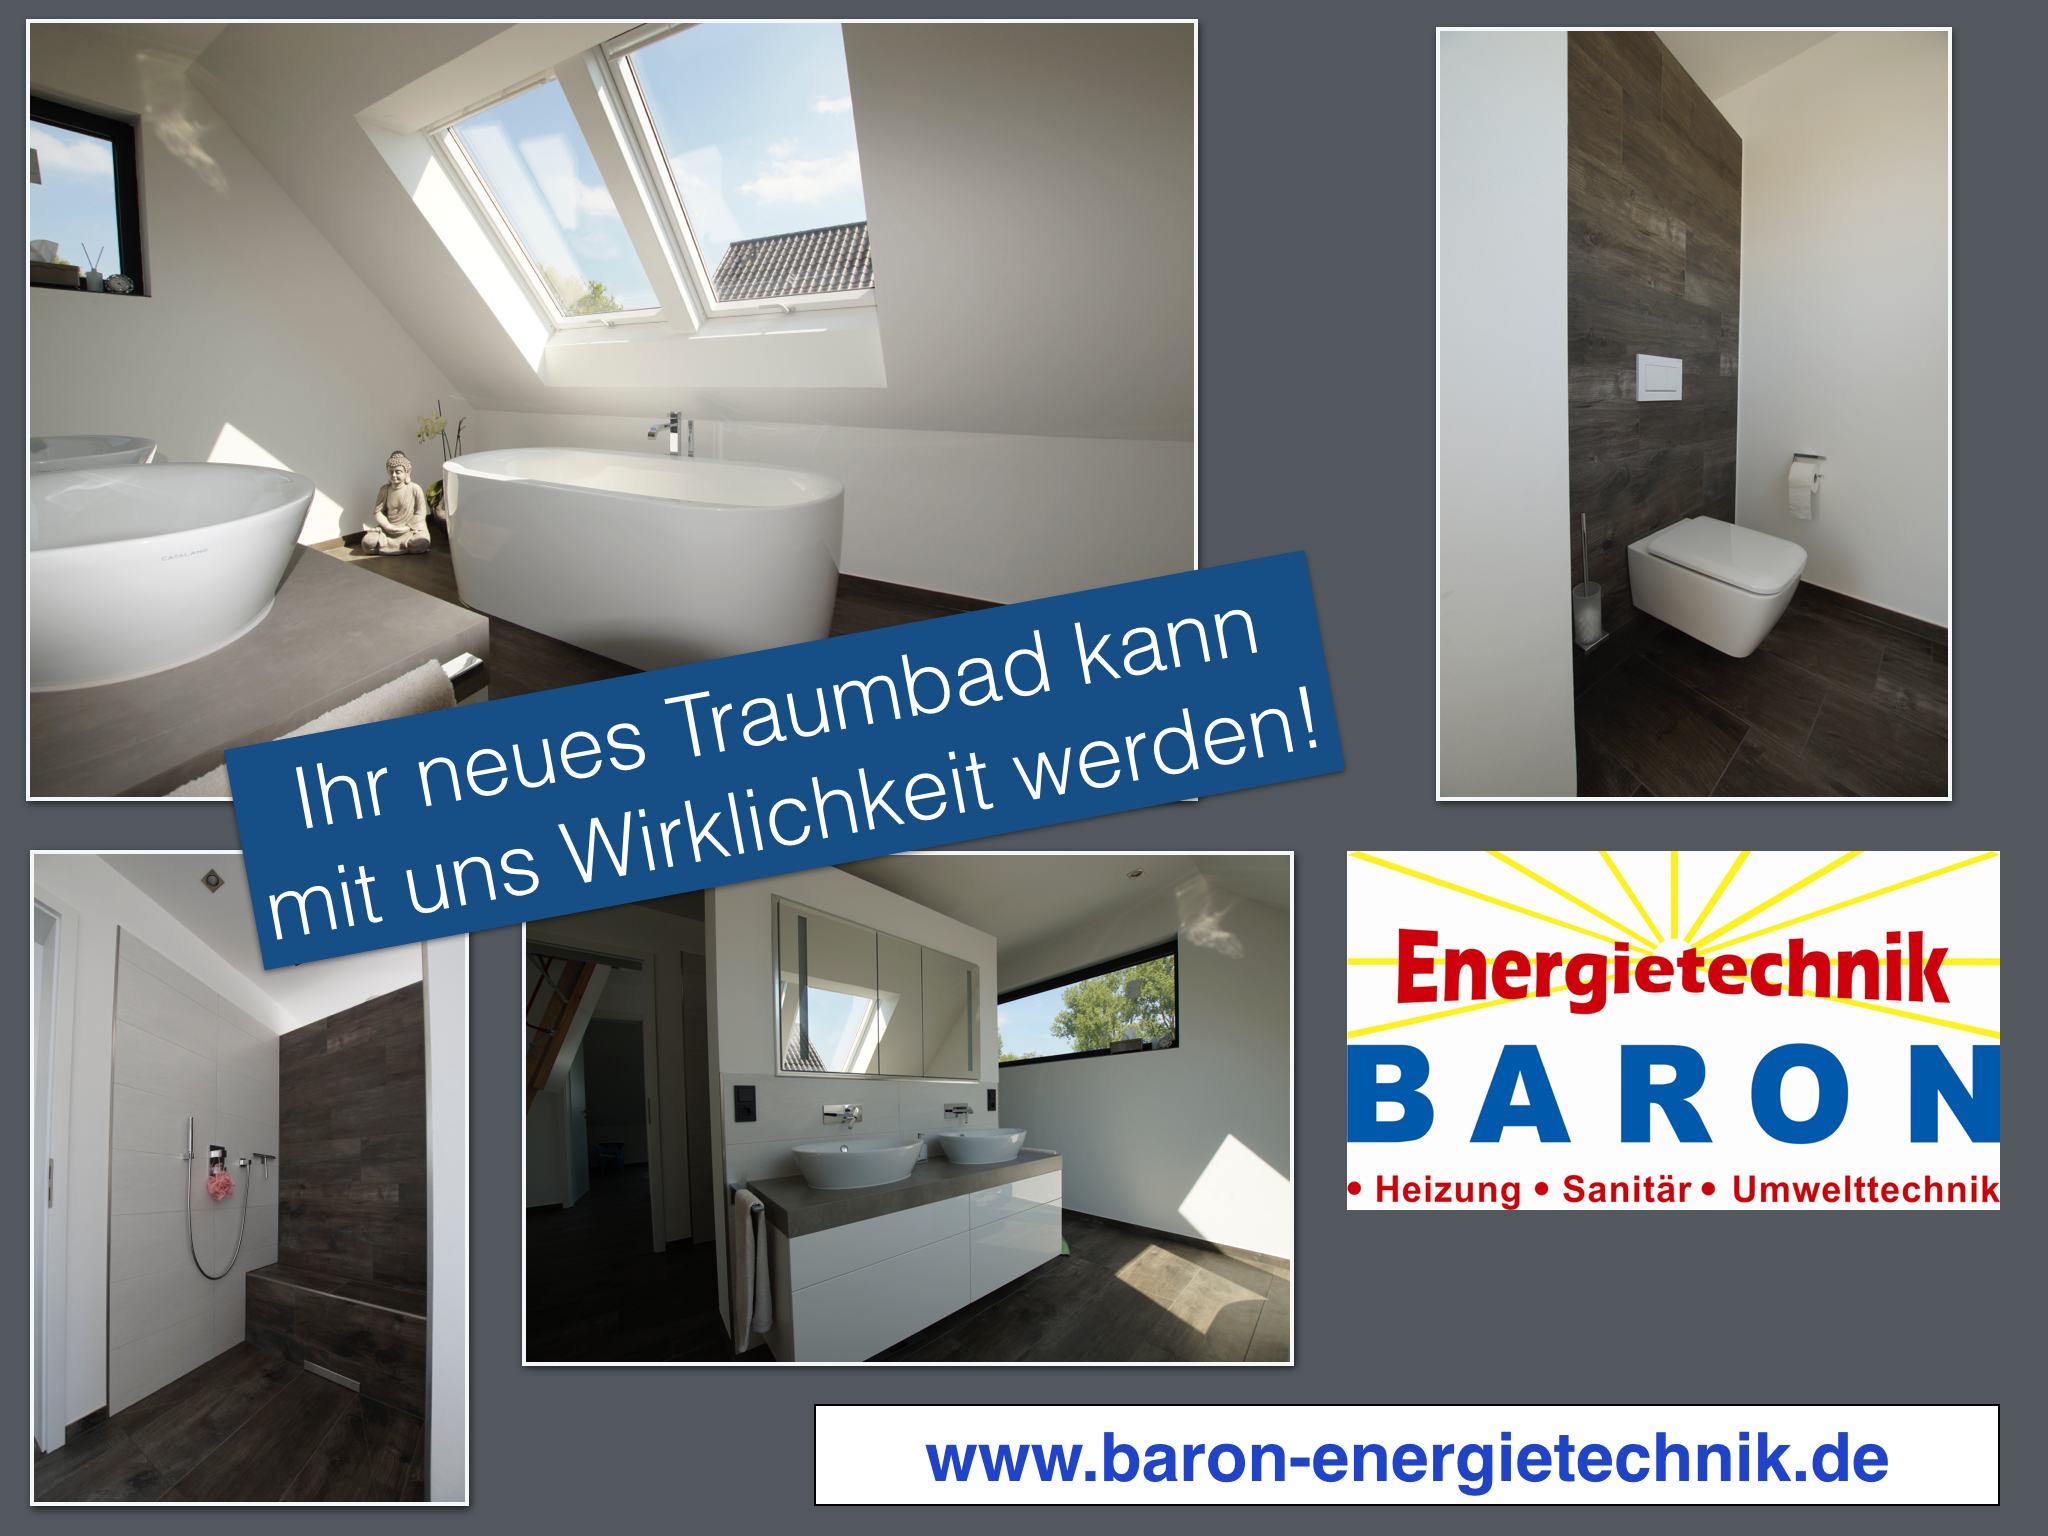 Energietechnik Baron GmbH & Co. KG, Hohenholter Str. 8 in Havixbeck